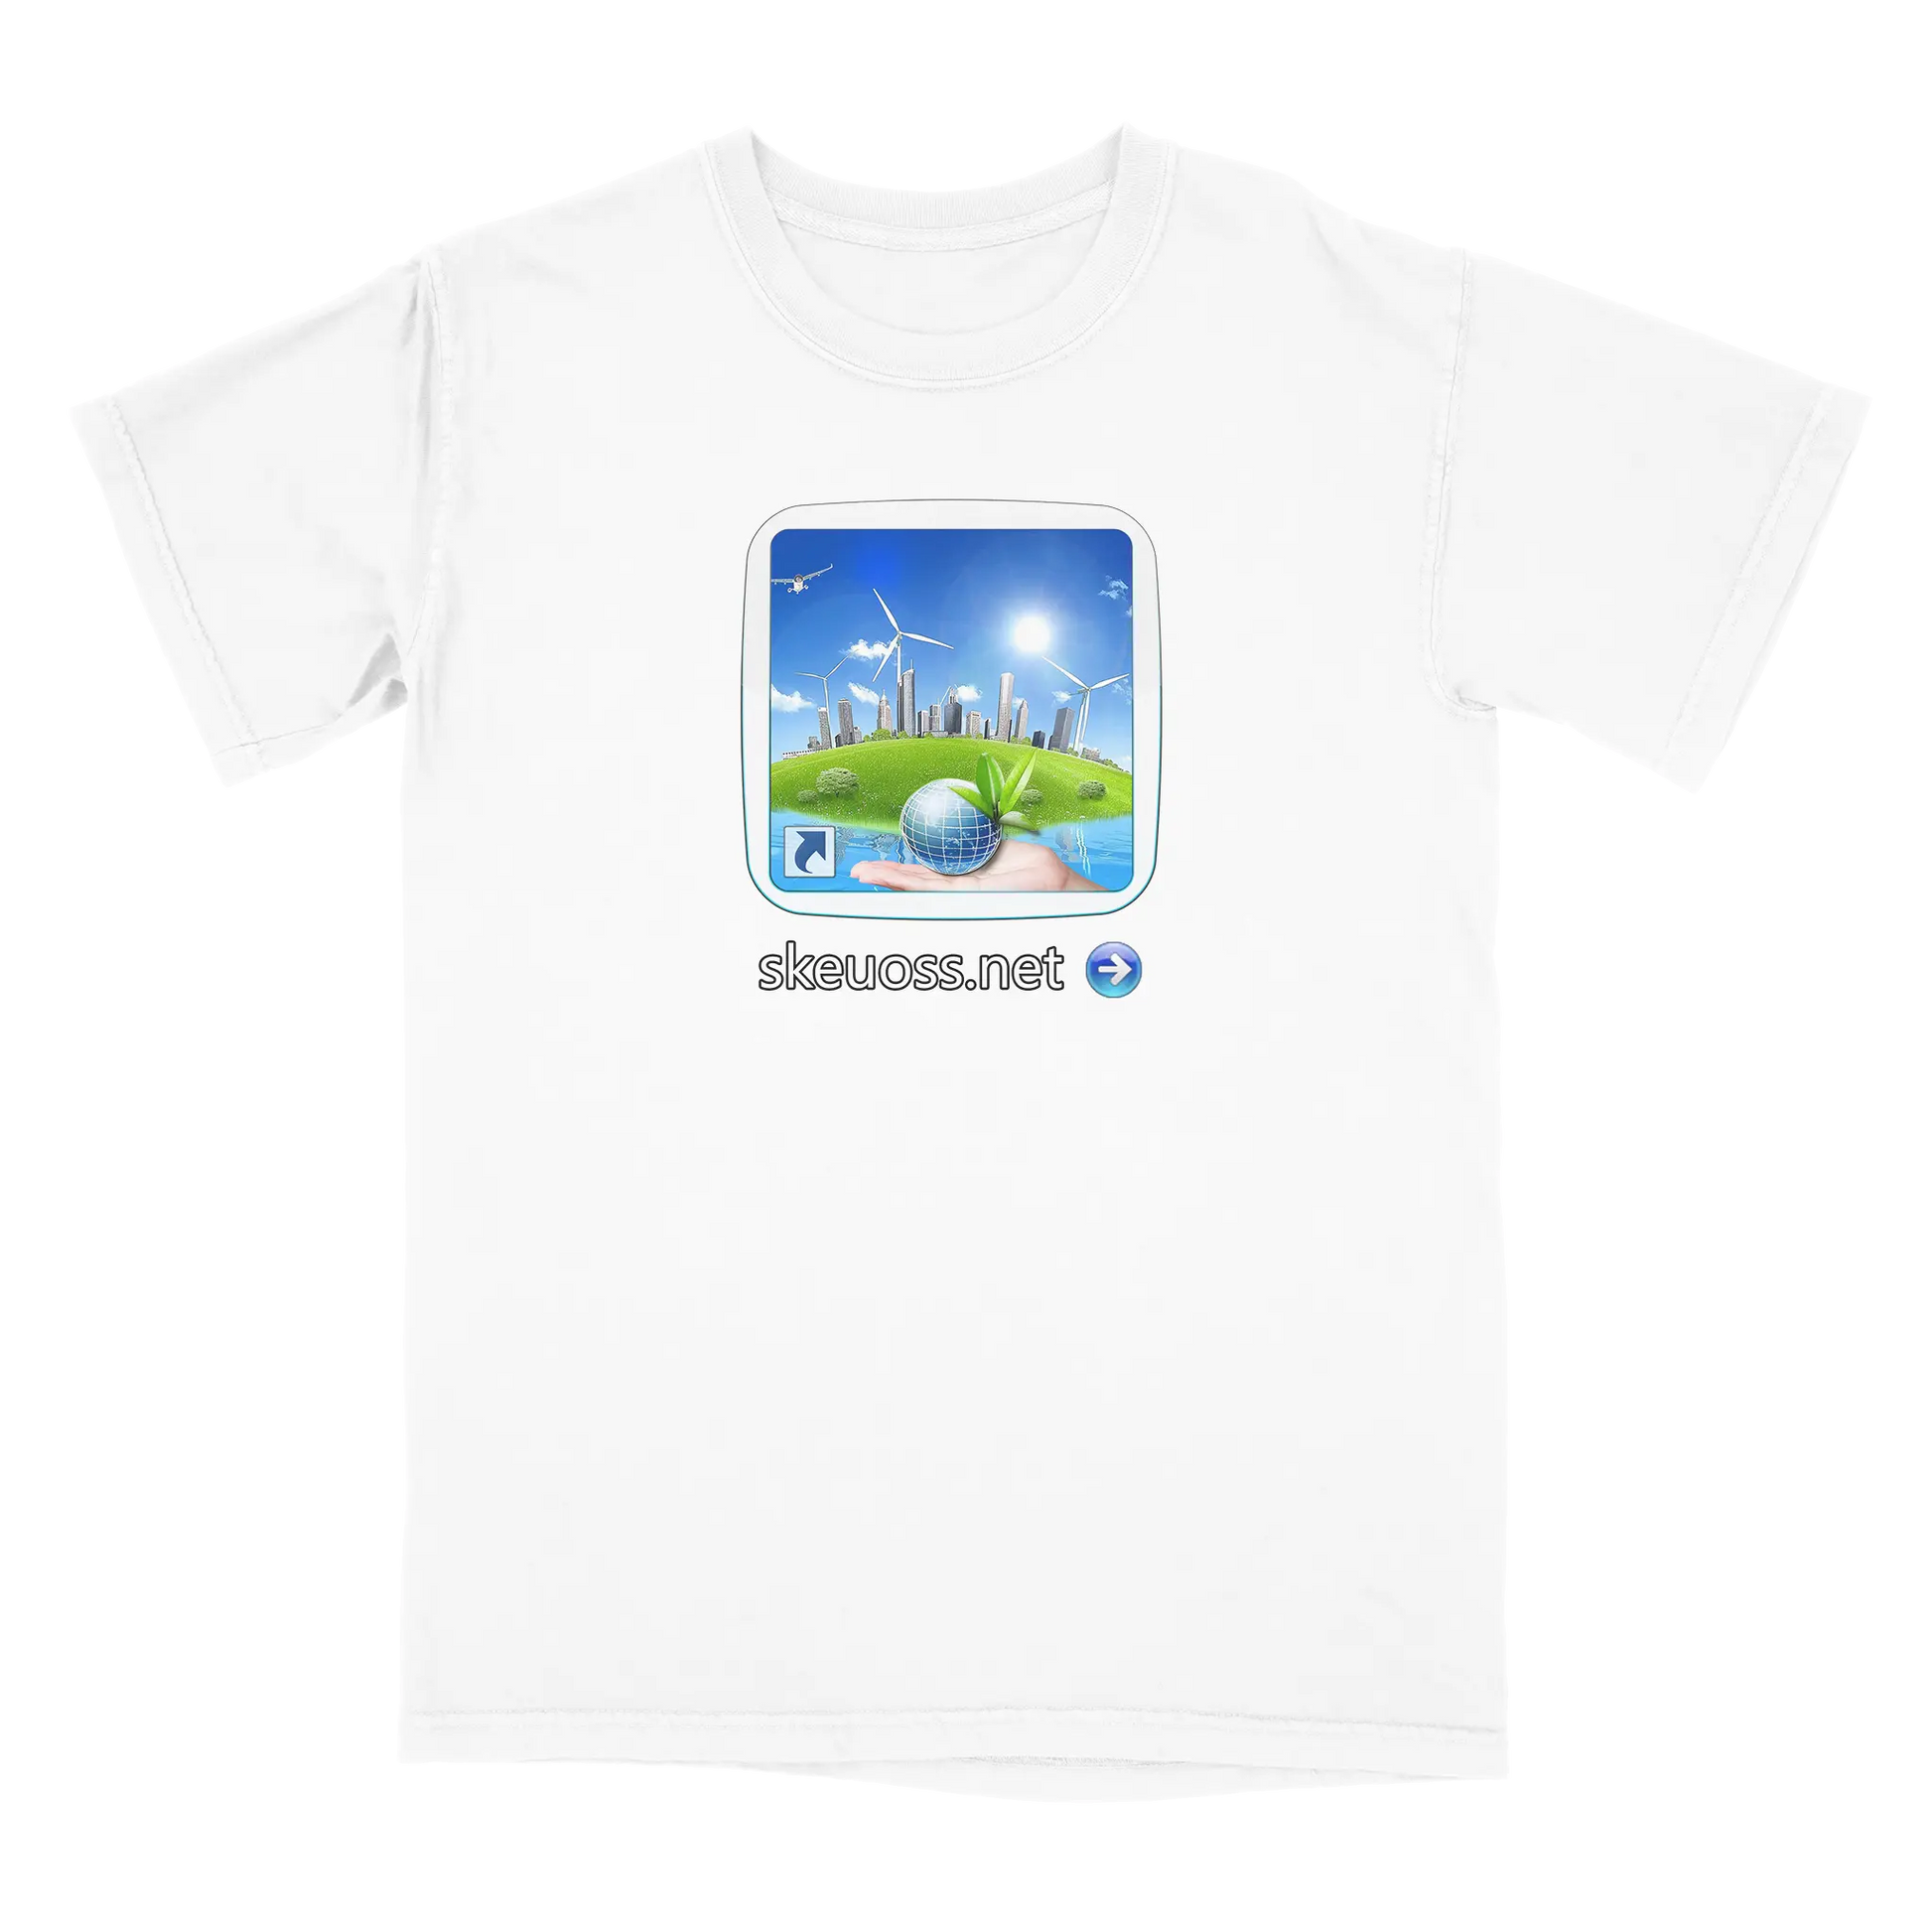 Frutiger Aero T-shirt - User Login Collection - User 318